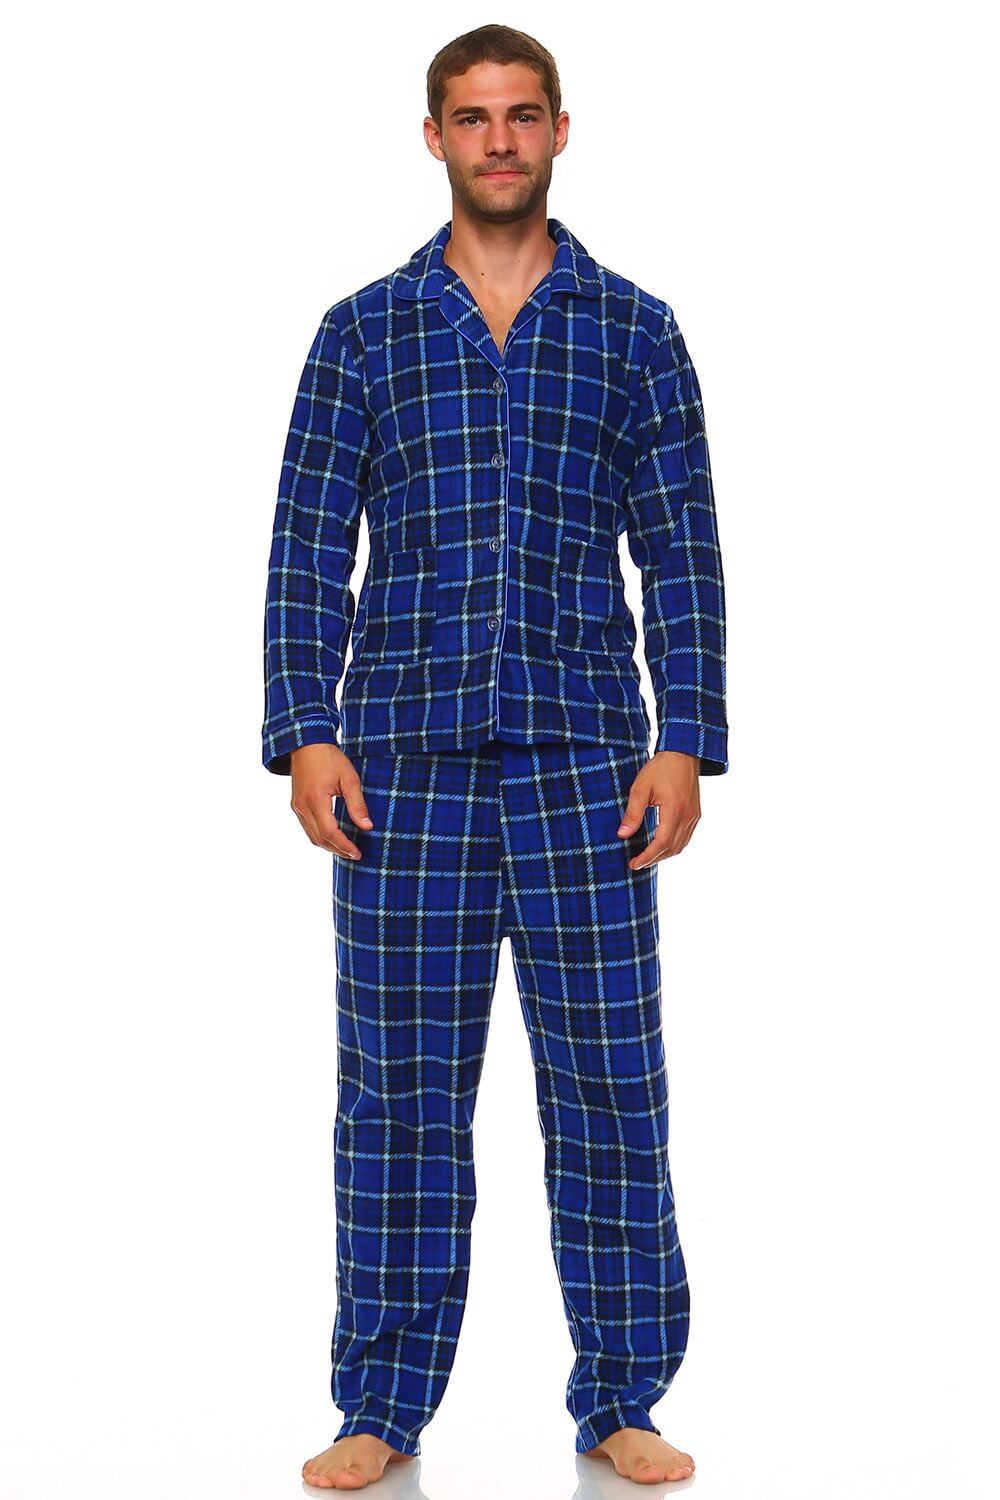 Details about   Club Room Mens PJ Set Long Sleeve Fleece Shirt & Pants Navy Plaid Choose Size 